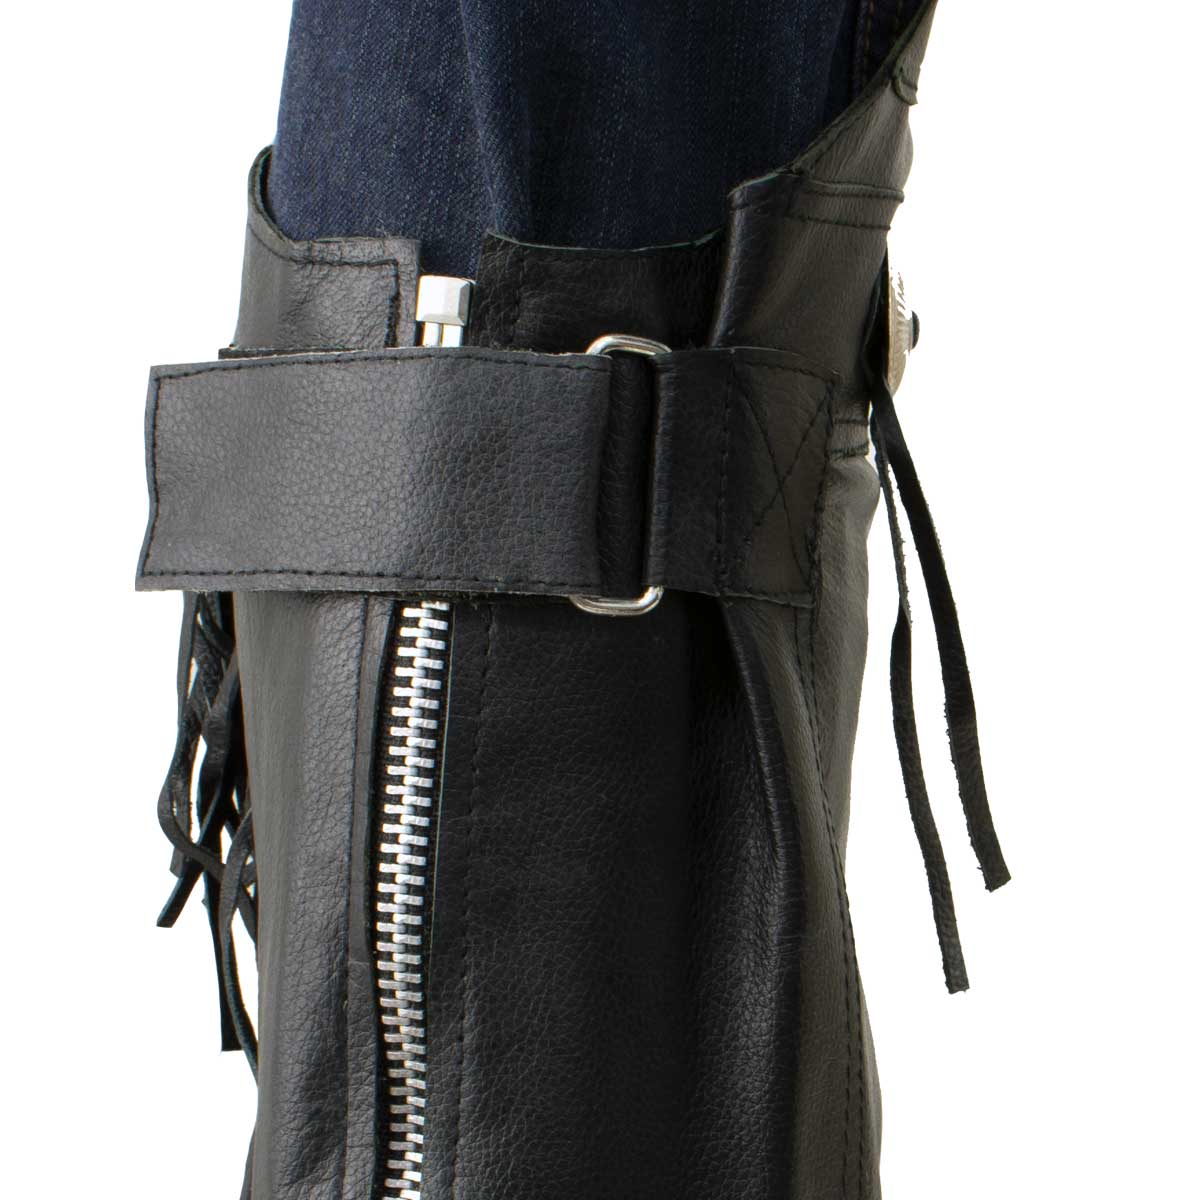 Genuine Leather SH1199FR Women's Black ‘Fringed’ Leather Short Chaps with Conchos with Conchos